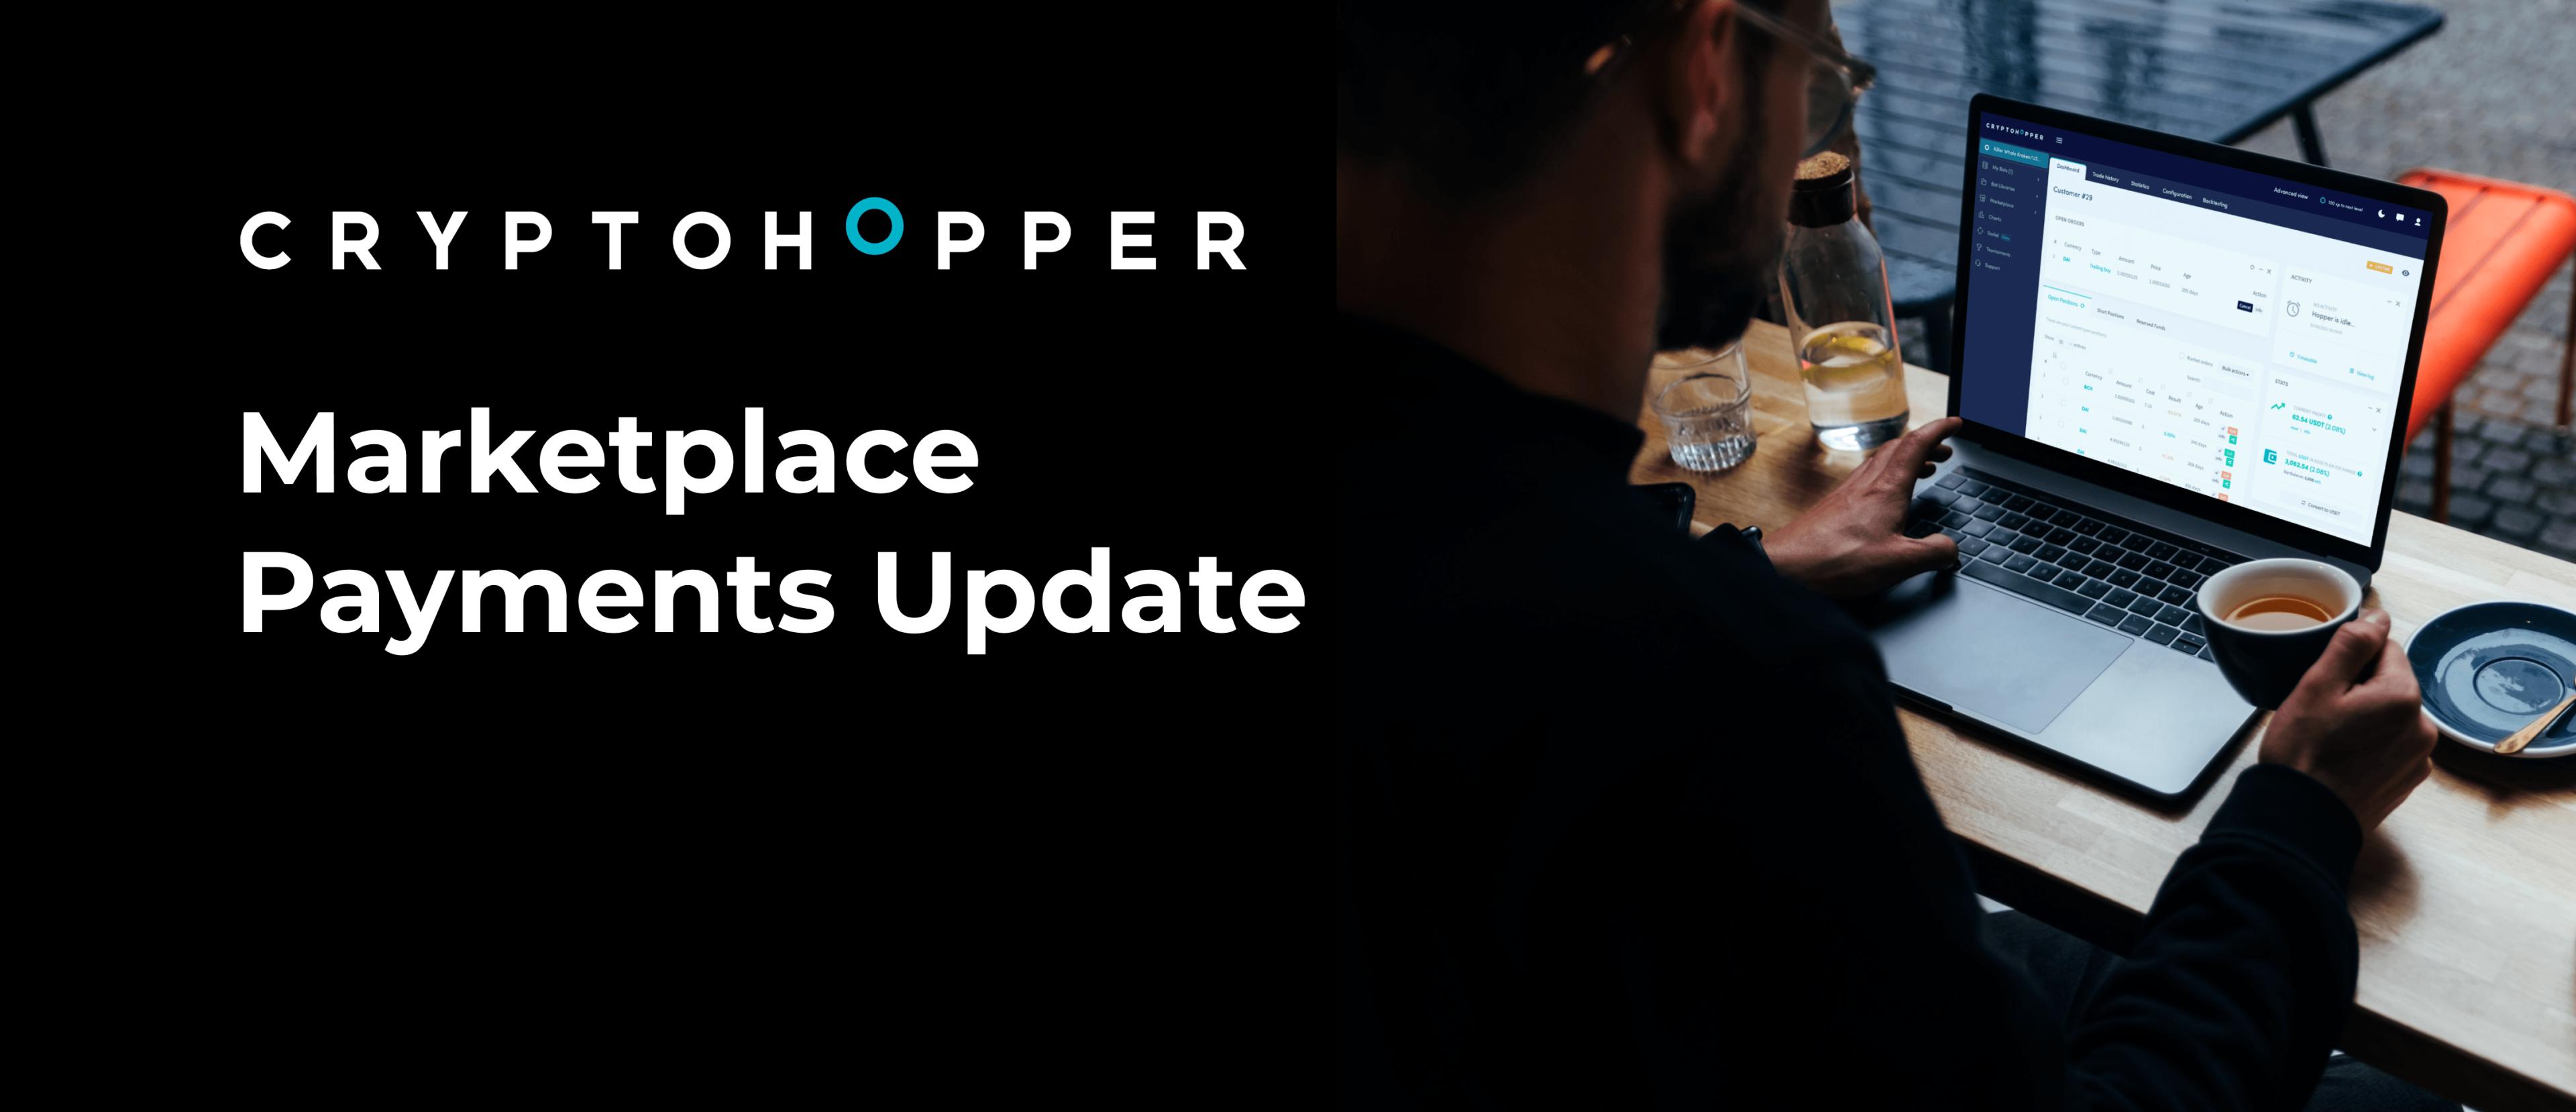 Cryptohopper Marketplace Payments Update 